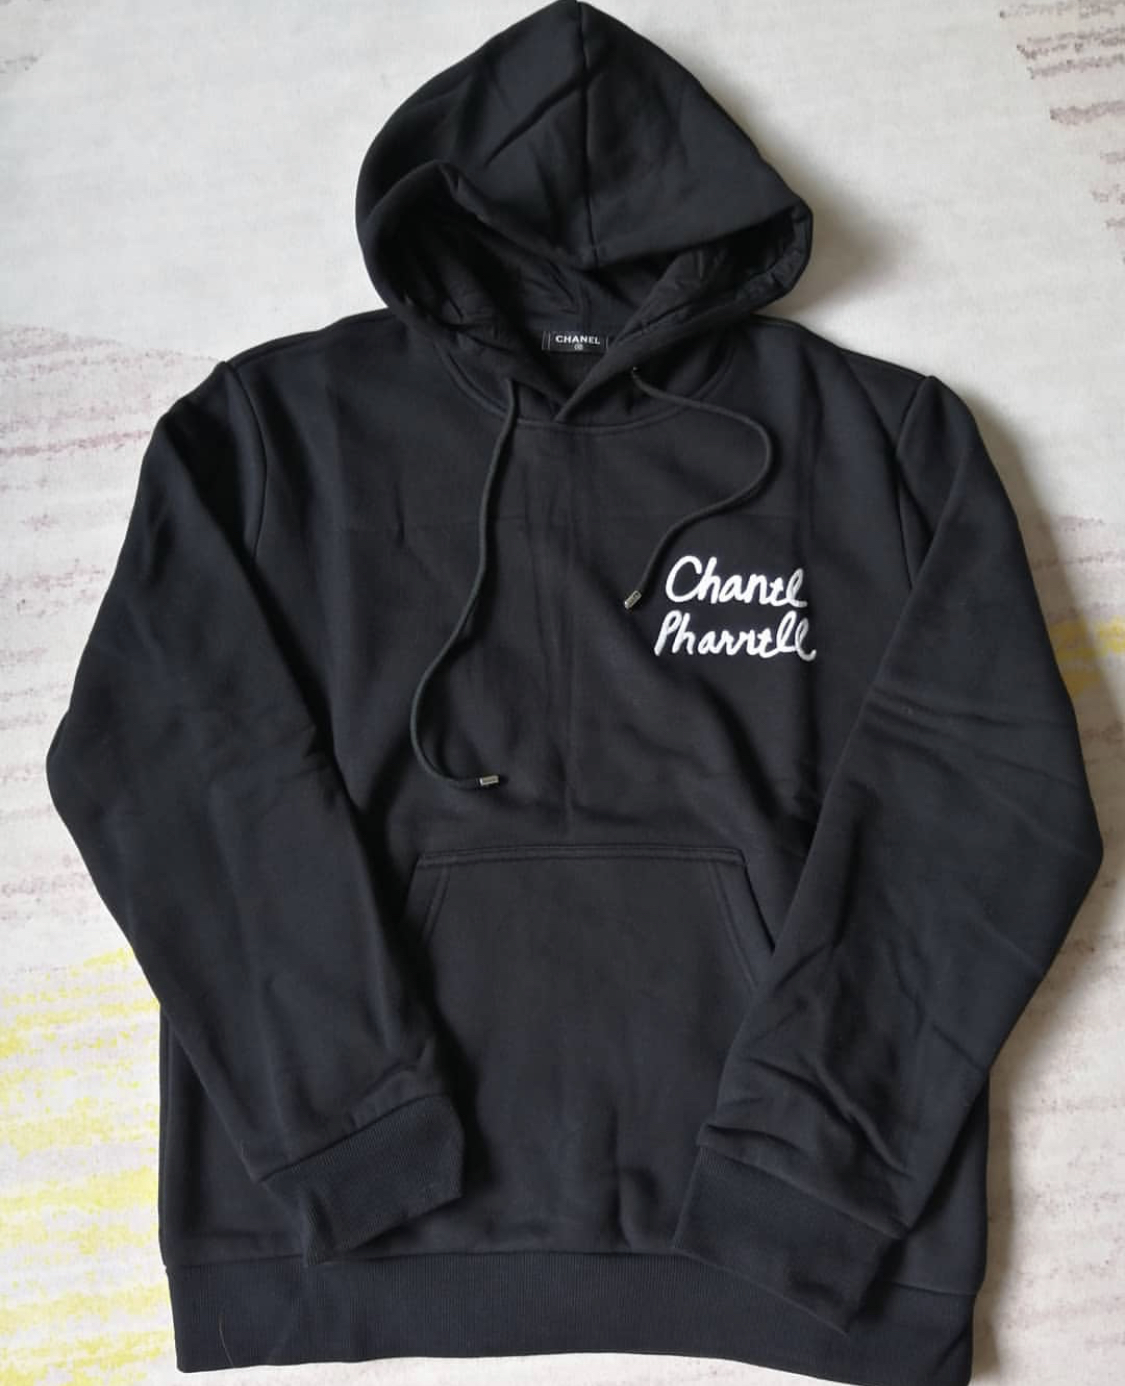 chanel pharrell hoodie